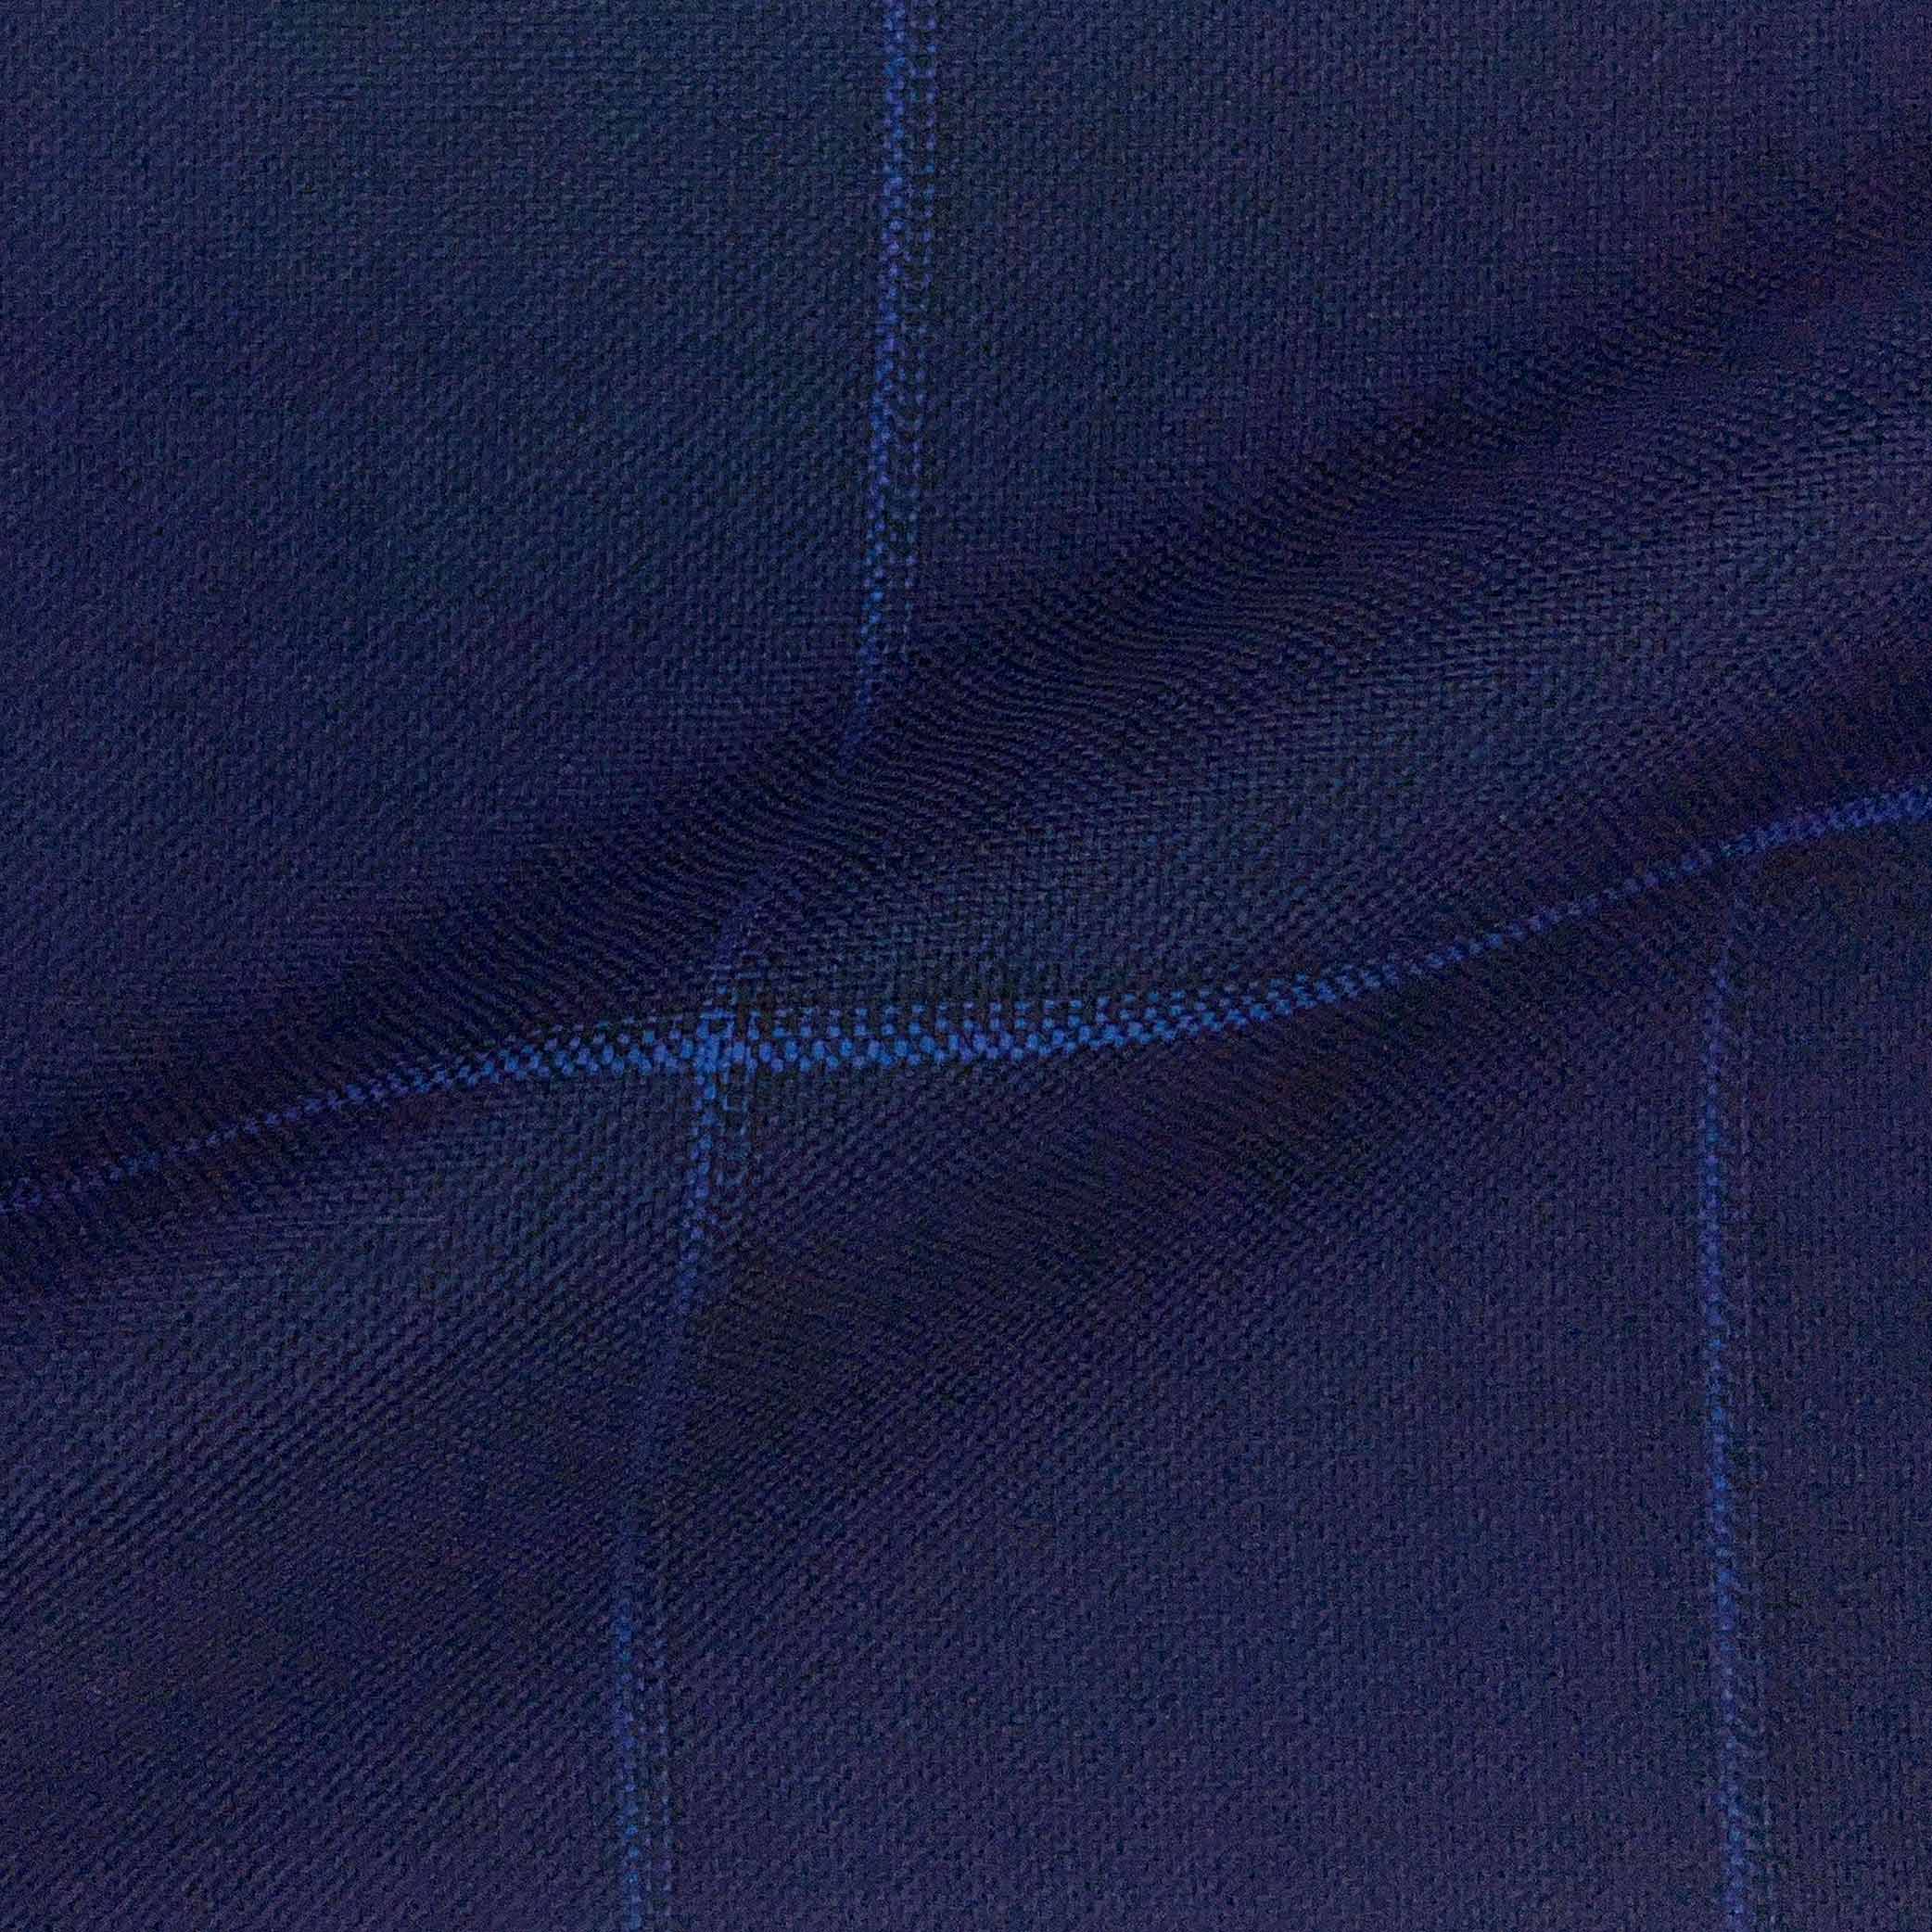 Westwood Hart Online Custom Hand Tailor Suits Sportcoats Trousers Waistcoats Overcoats Navy Blue W/ Royal Blue Windowpane Design